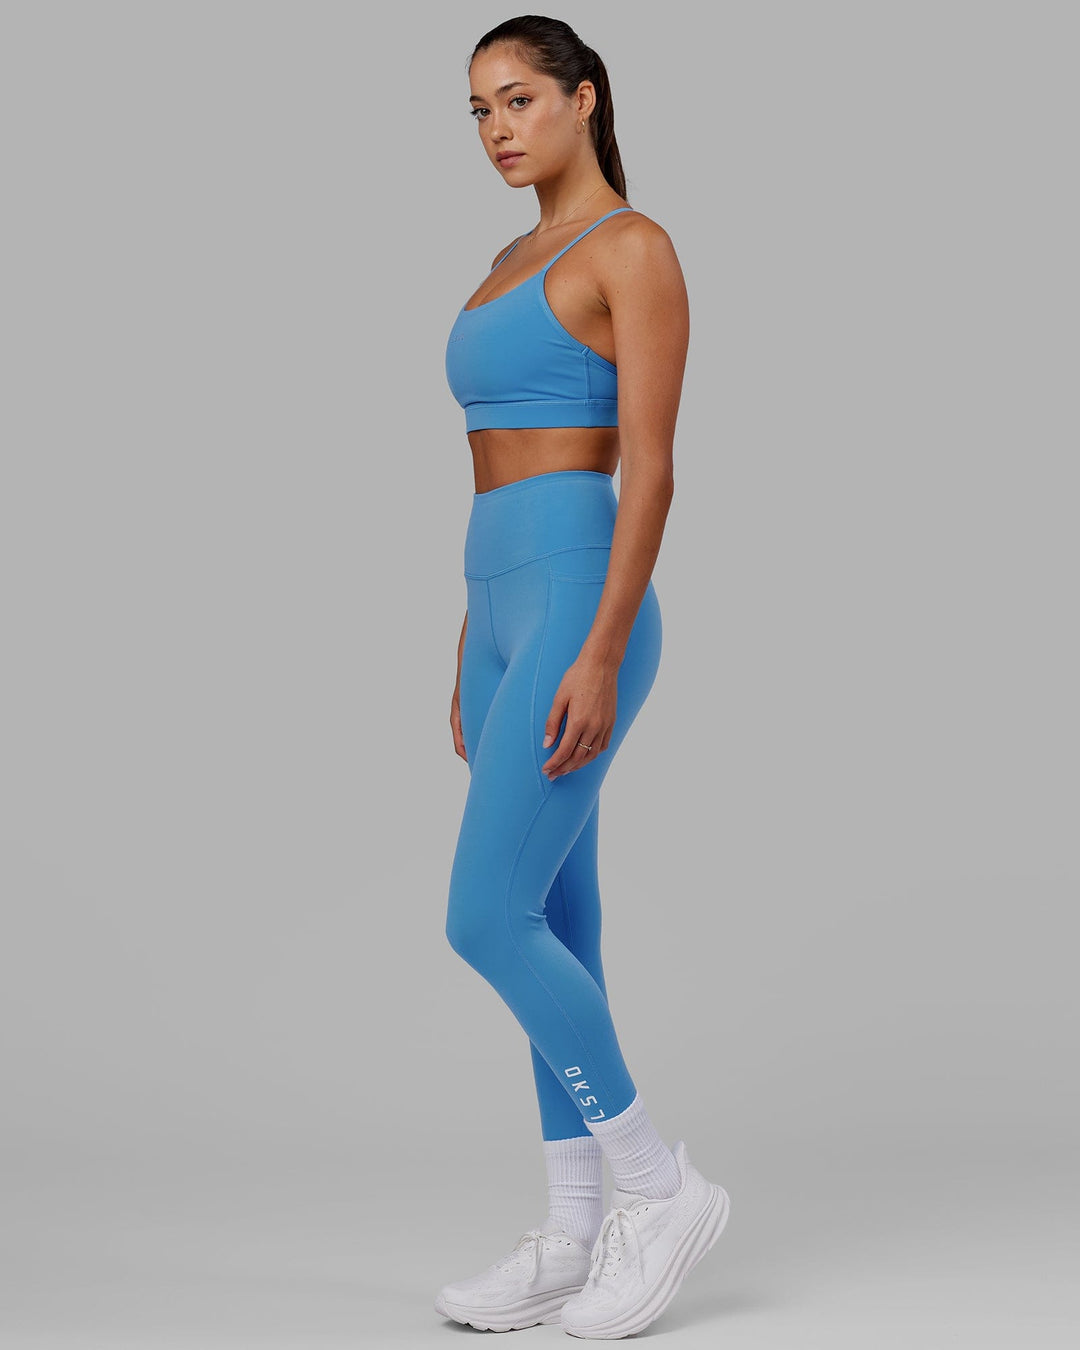 Woman wearing Flux 7/8 Length Tight - Azure Blue